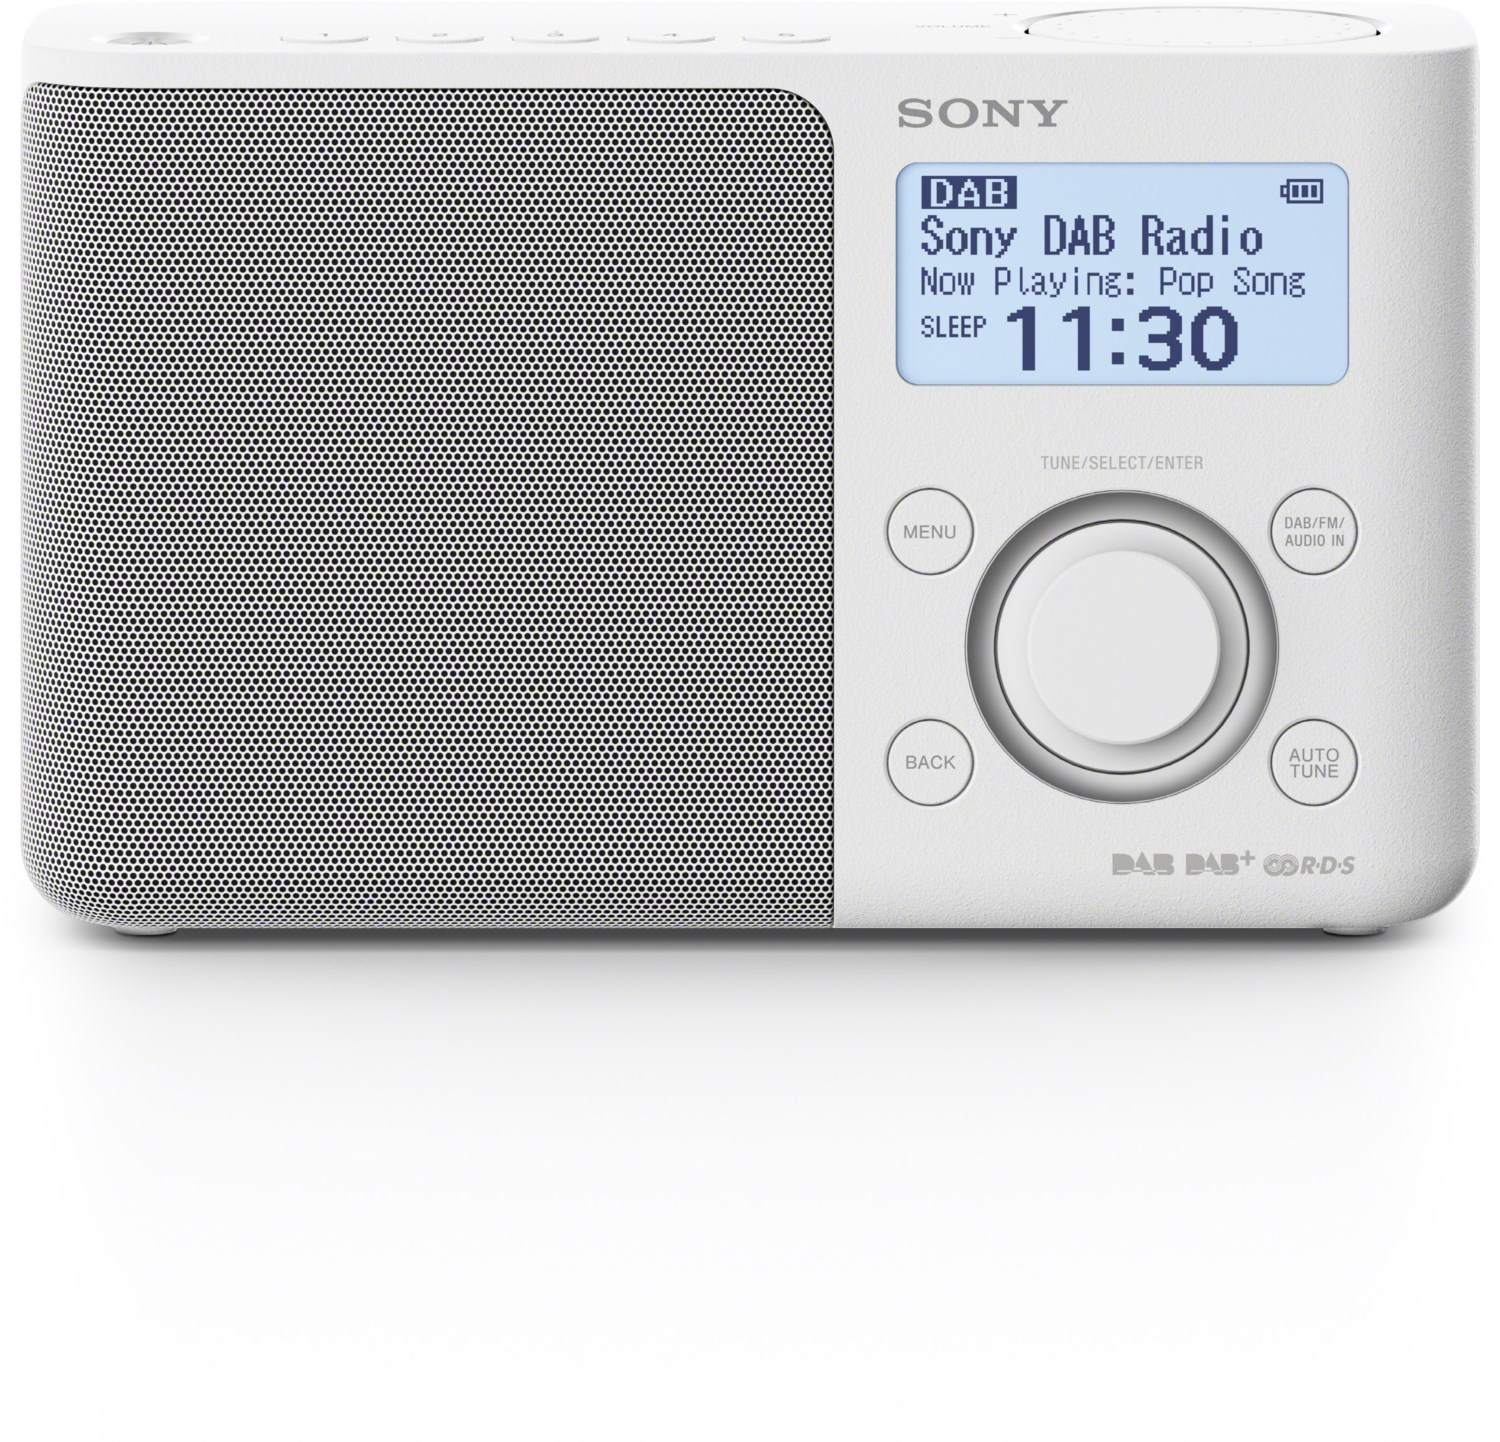 XDR-S61D Kofferradio mit DAB/DAB+ weiß von Sony